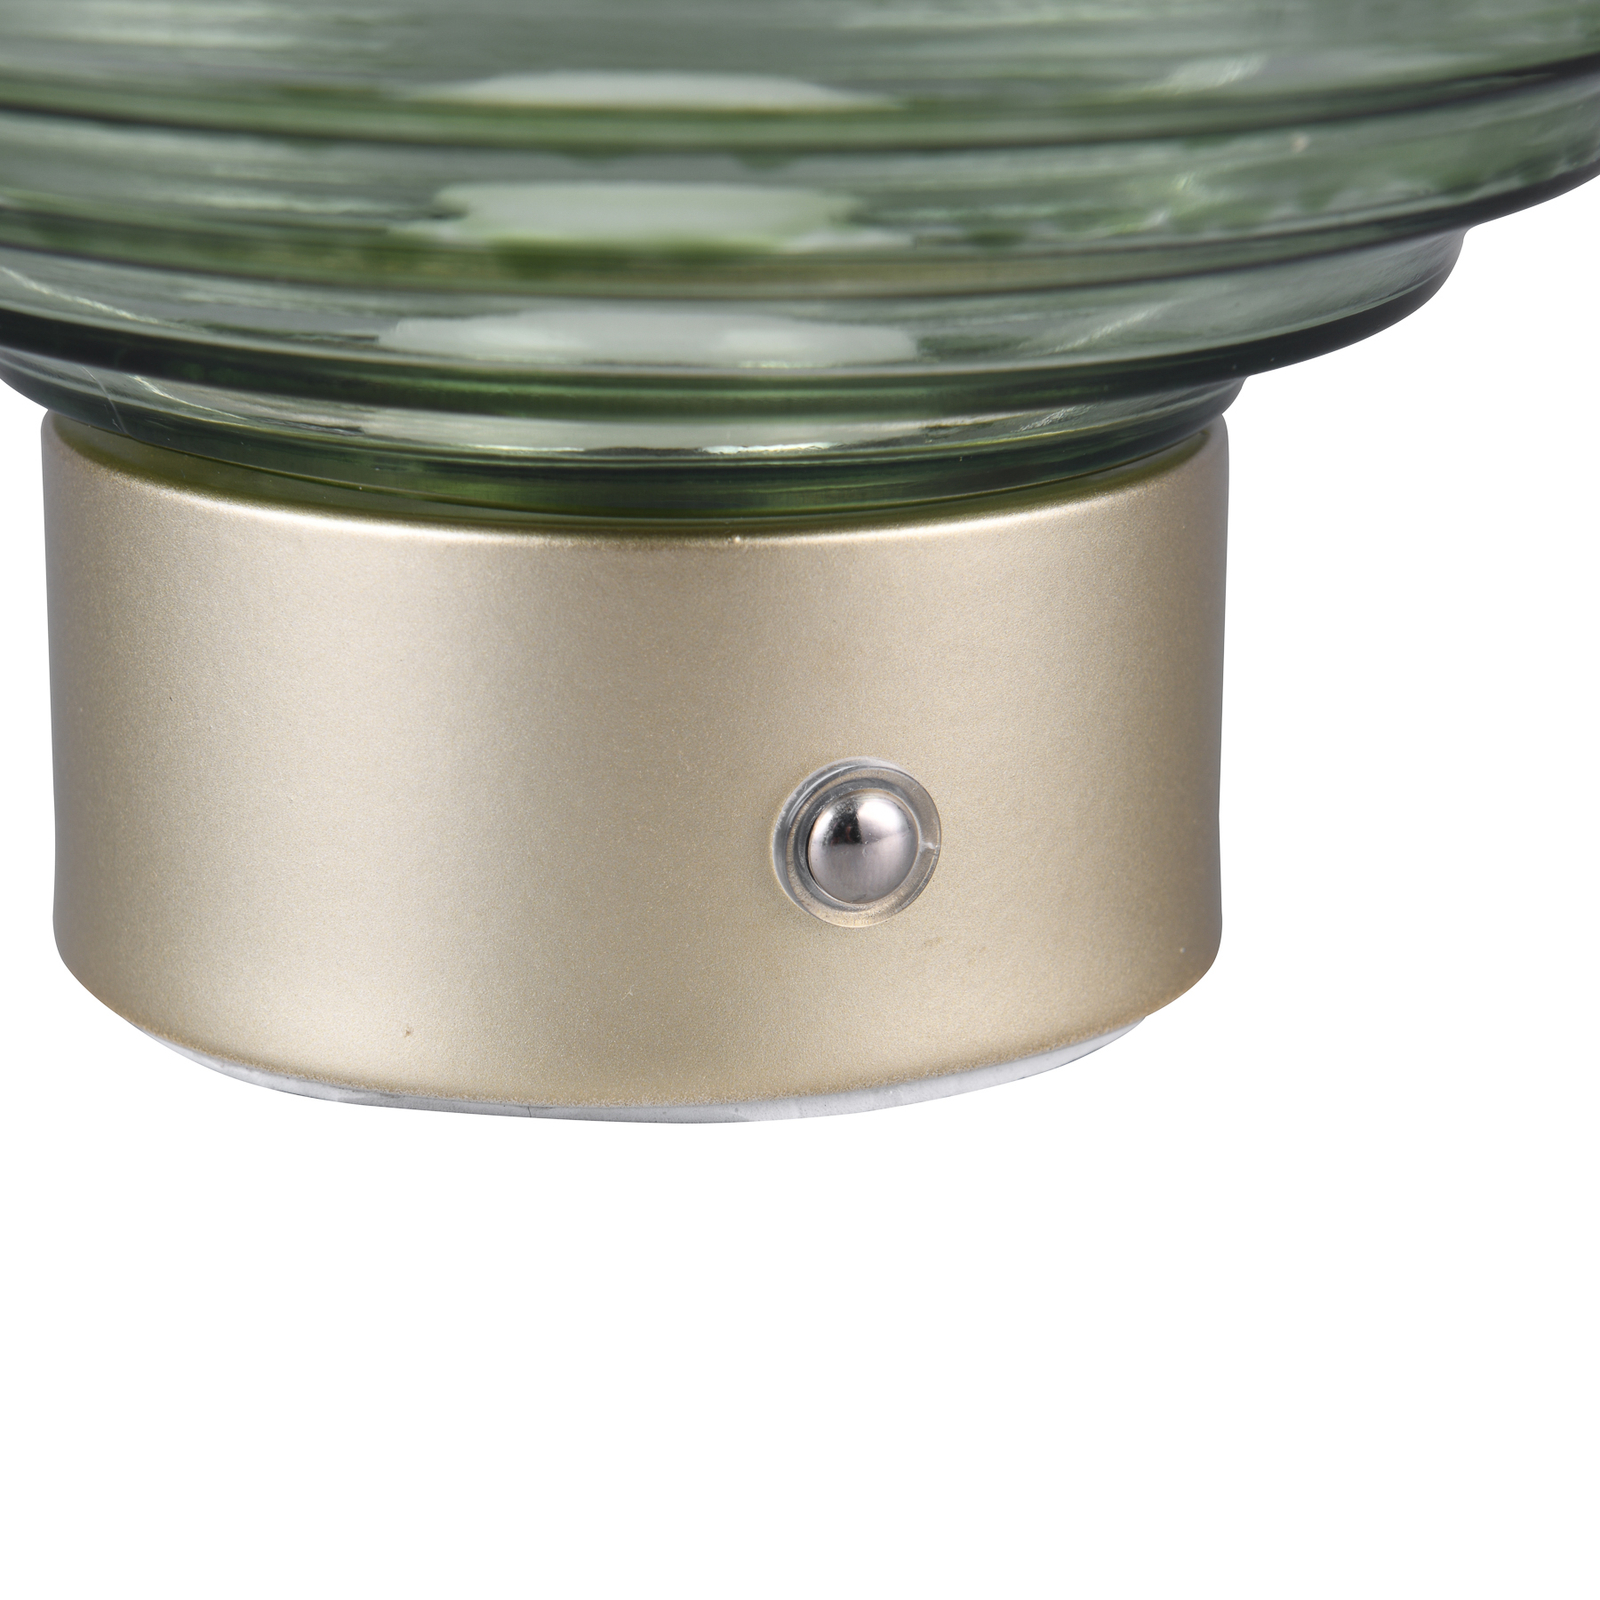 LED-Akku-Tischlampe Earl, messing/grün, Höhe 14,5 cm, Glas